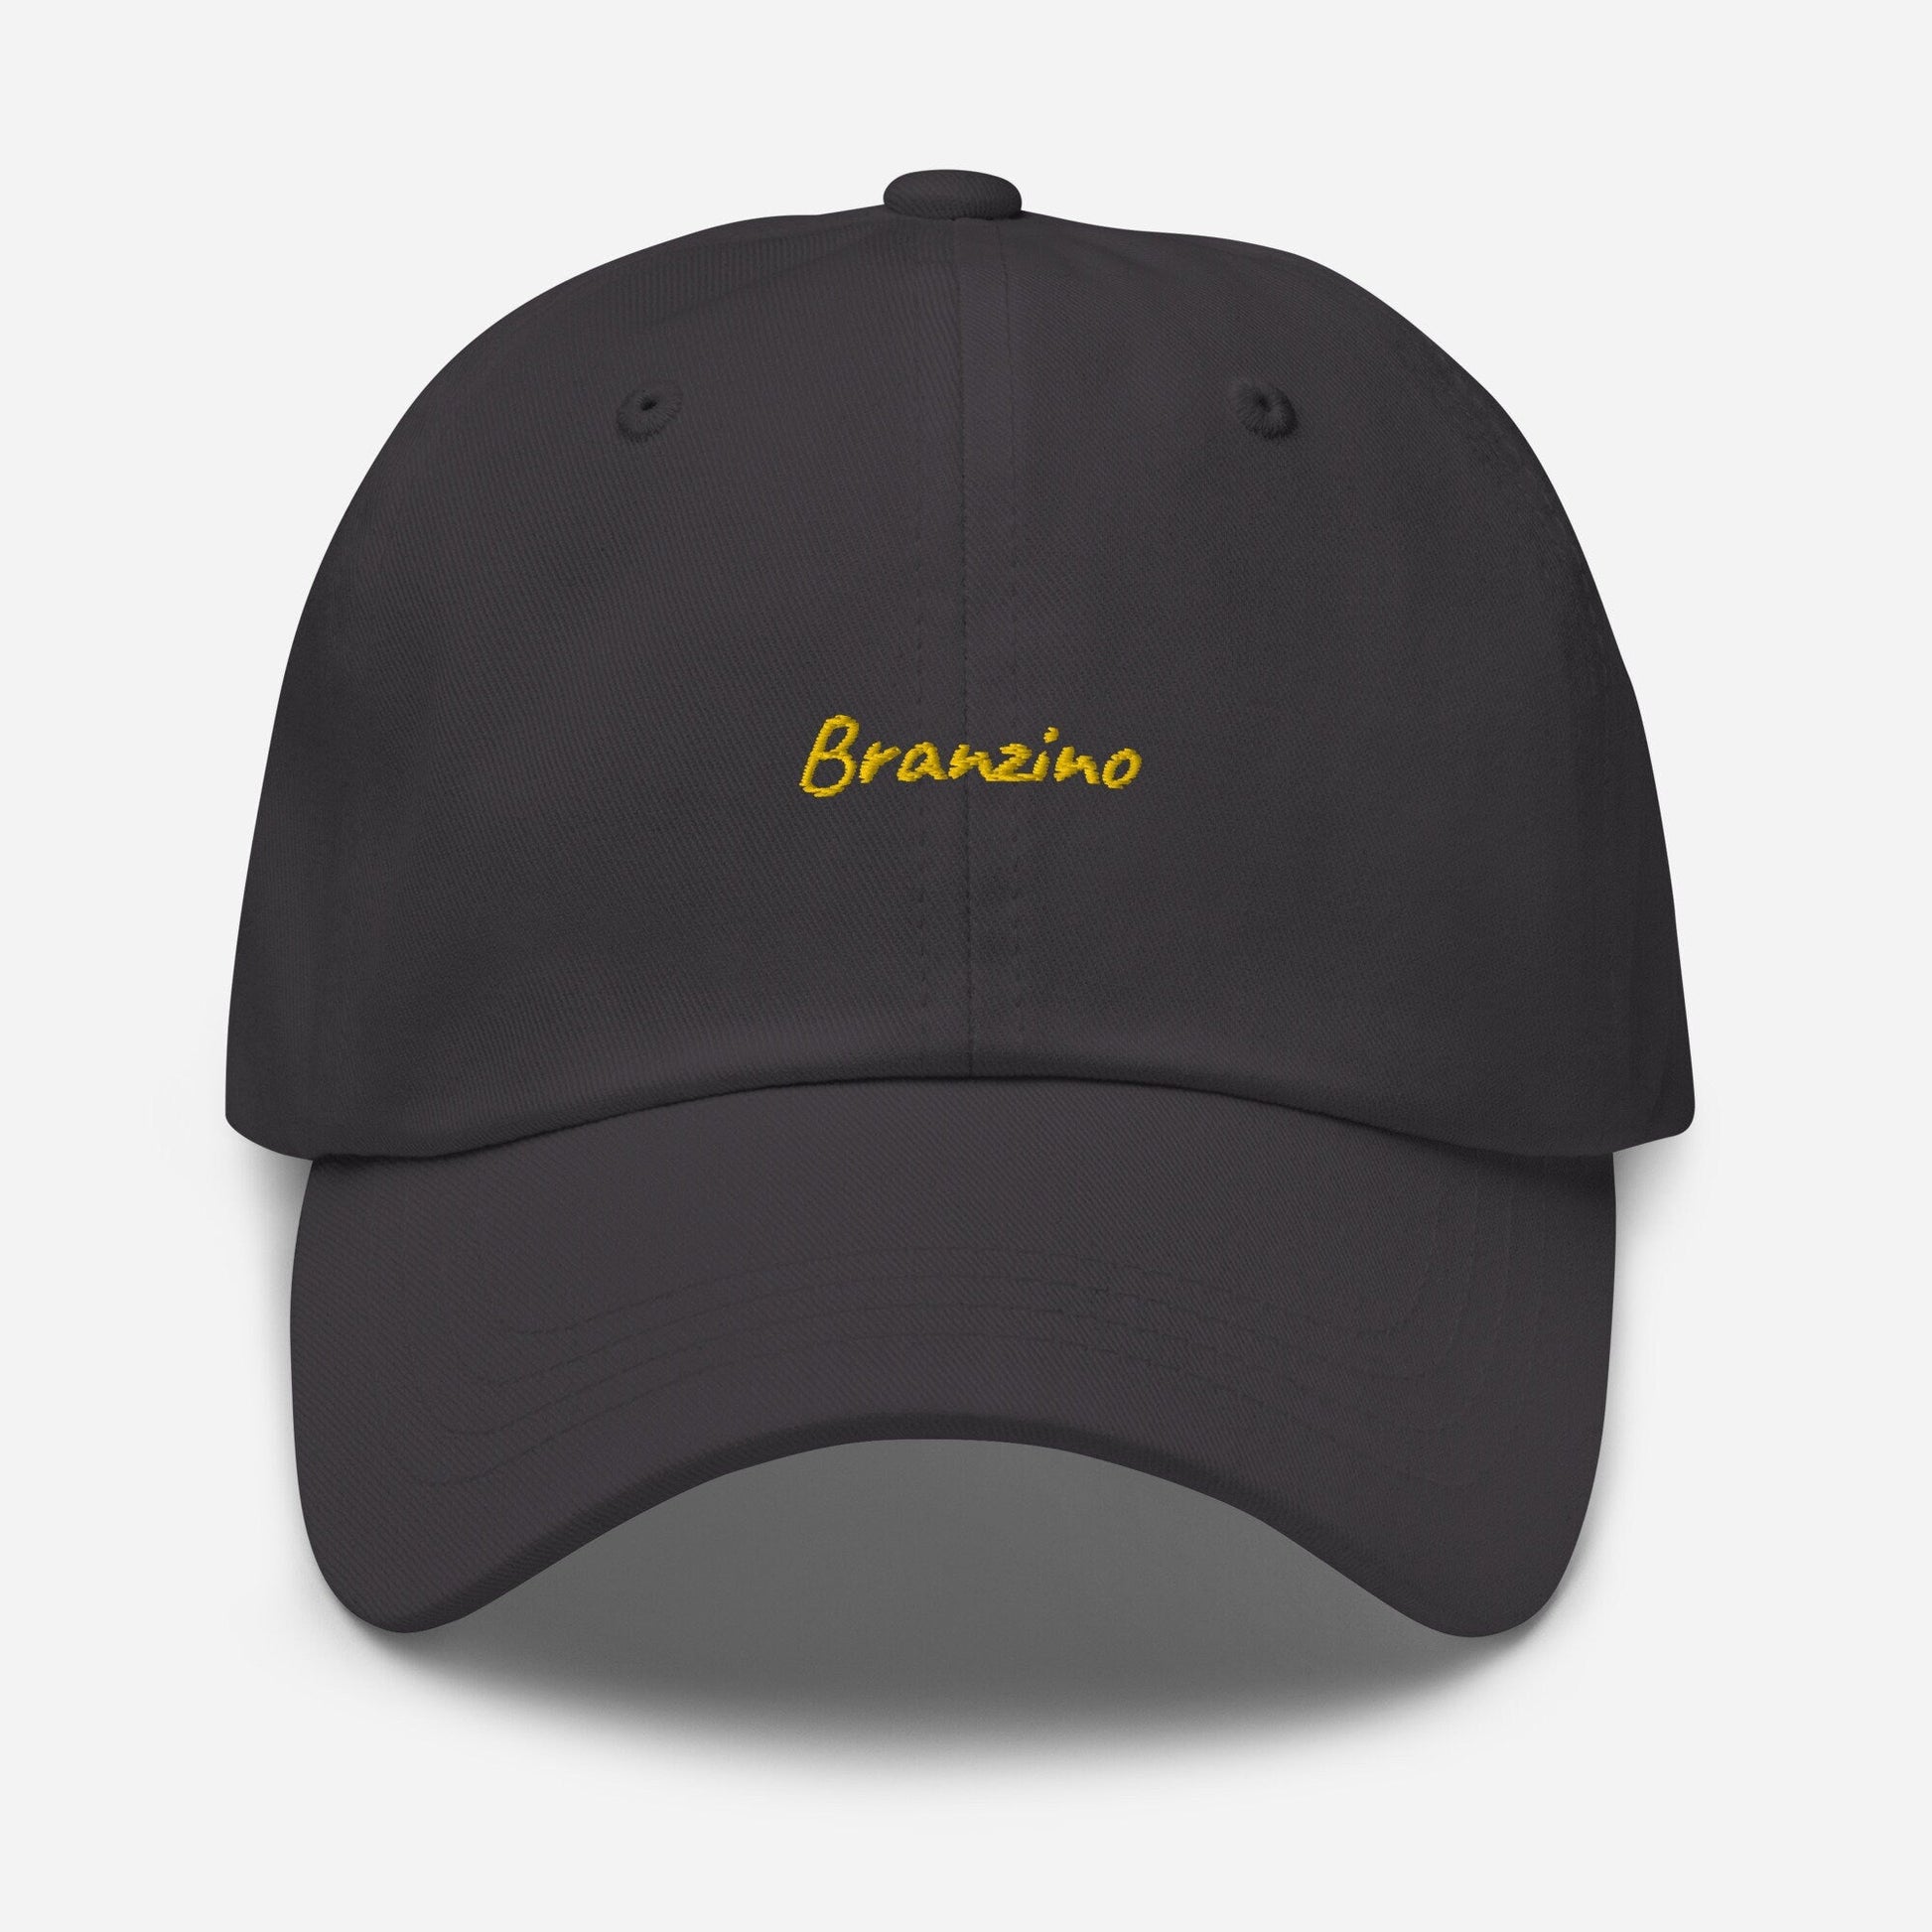 Branzino Dad Hat - Gift for Italian Mediterranean Seafood Lovers - Embroidered Cotton Cap - Evilwater Originals